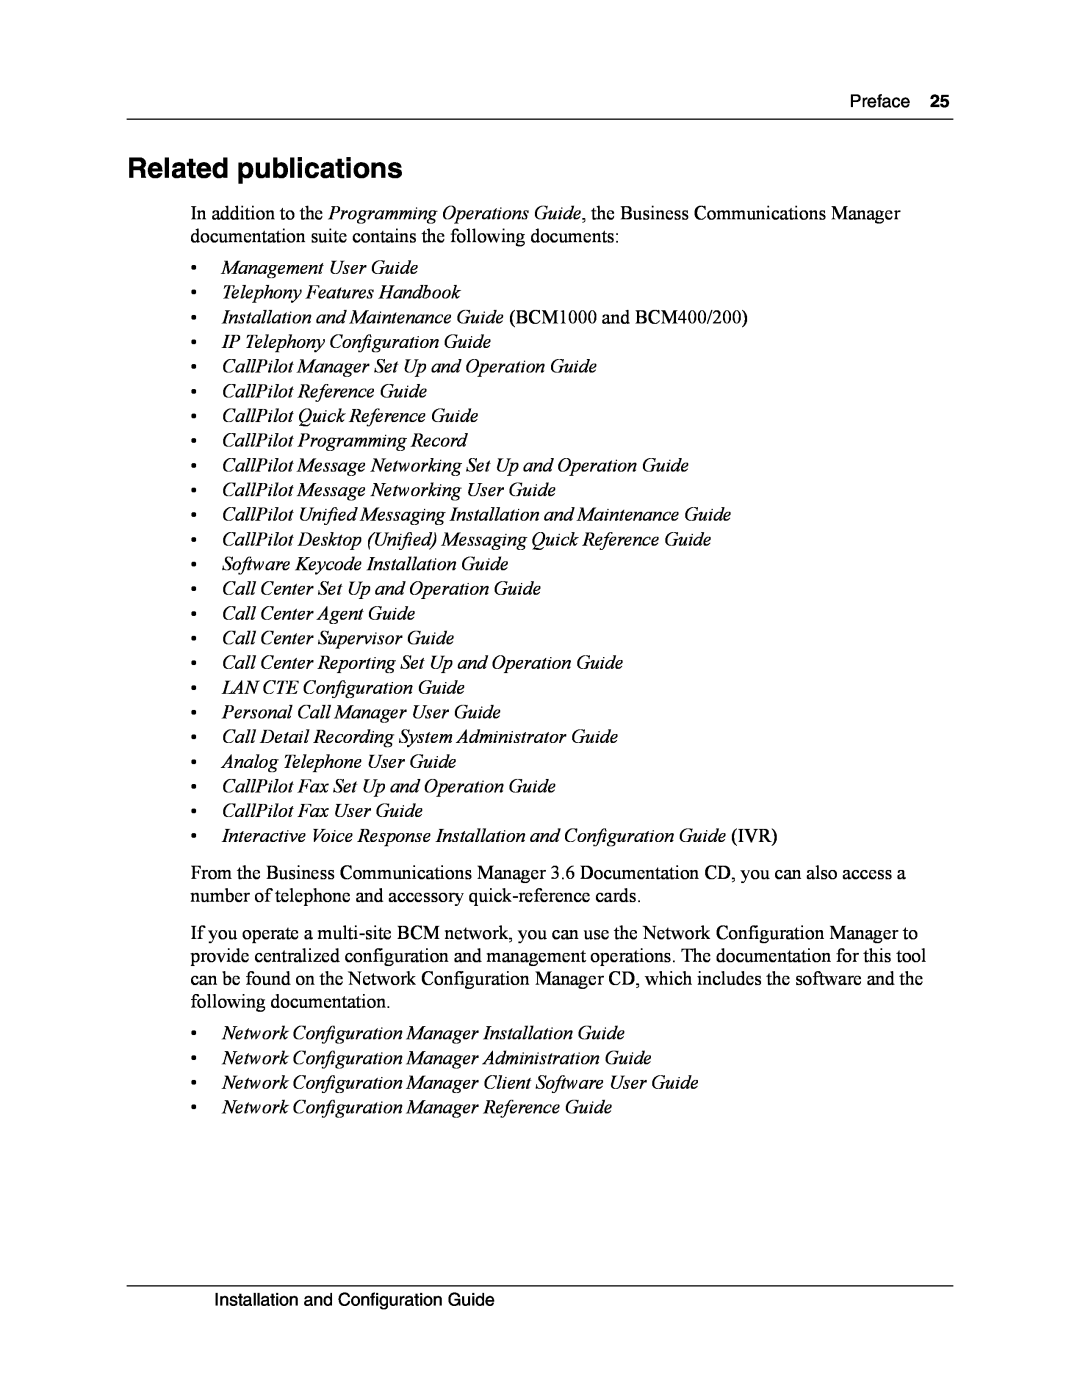 Nortel Networks MOG6xx, MOG7xx manual Related publications 